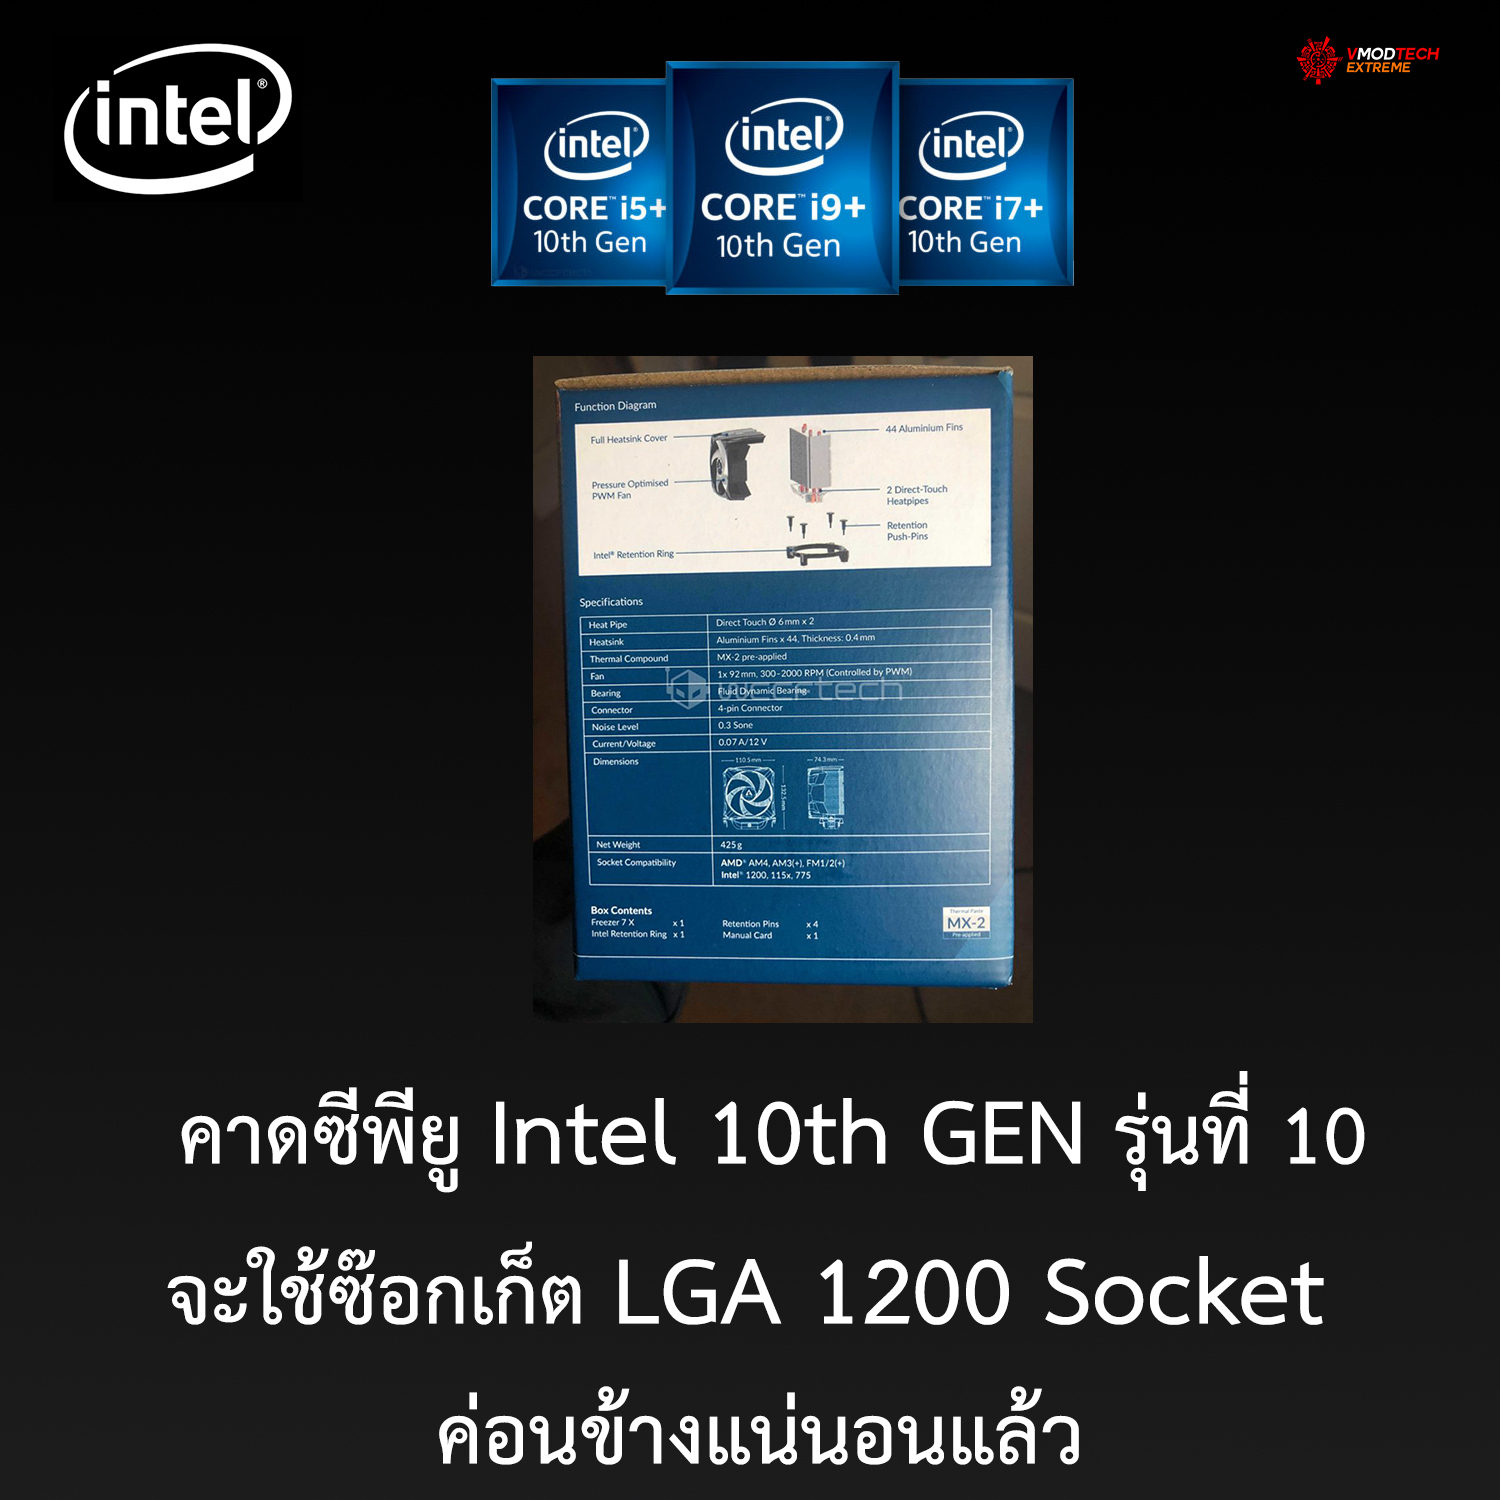 lga1200 คาดซีพียู Intel 10th GEN รุ่นที่ 10นั้นจะใช้ซ๊อกเก็ต LGA 1200 Socket ค่อนข้างแน่นอนแล้ว